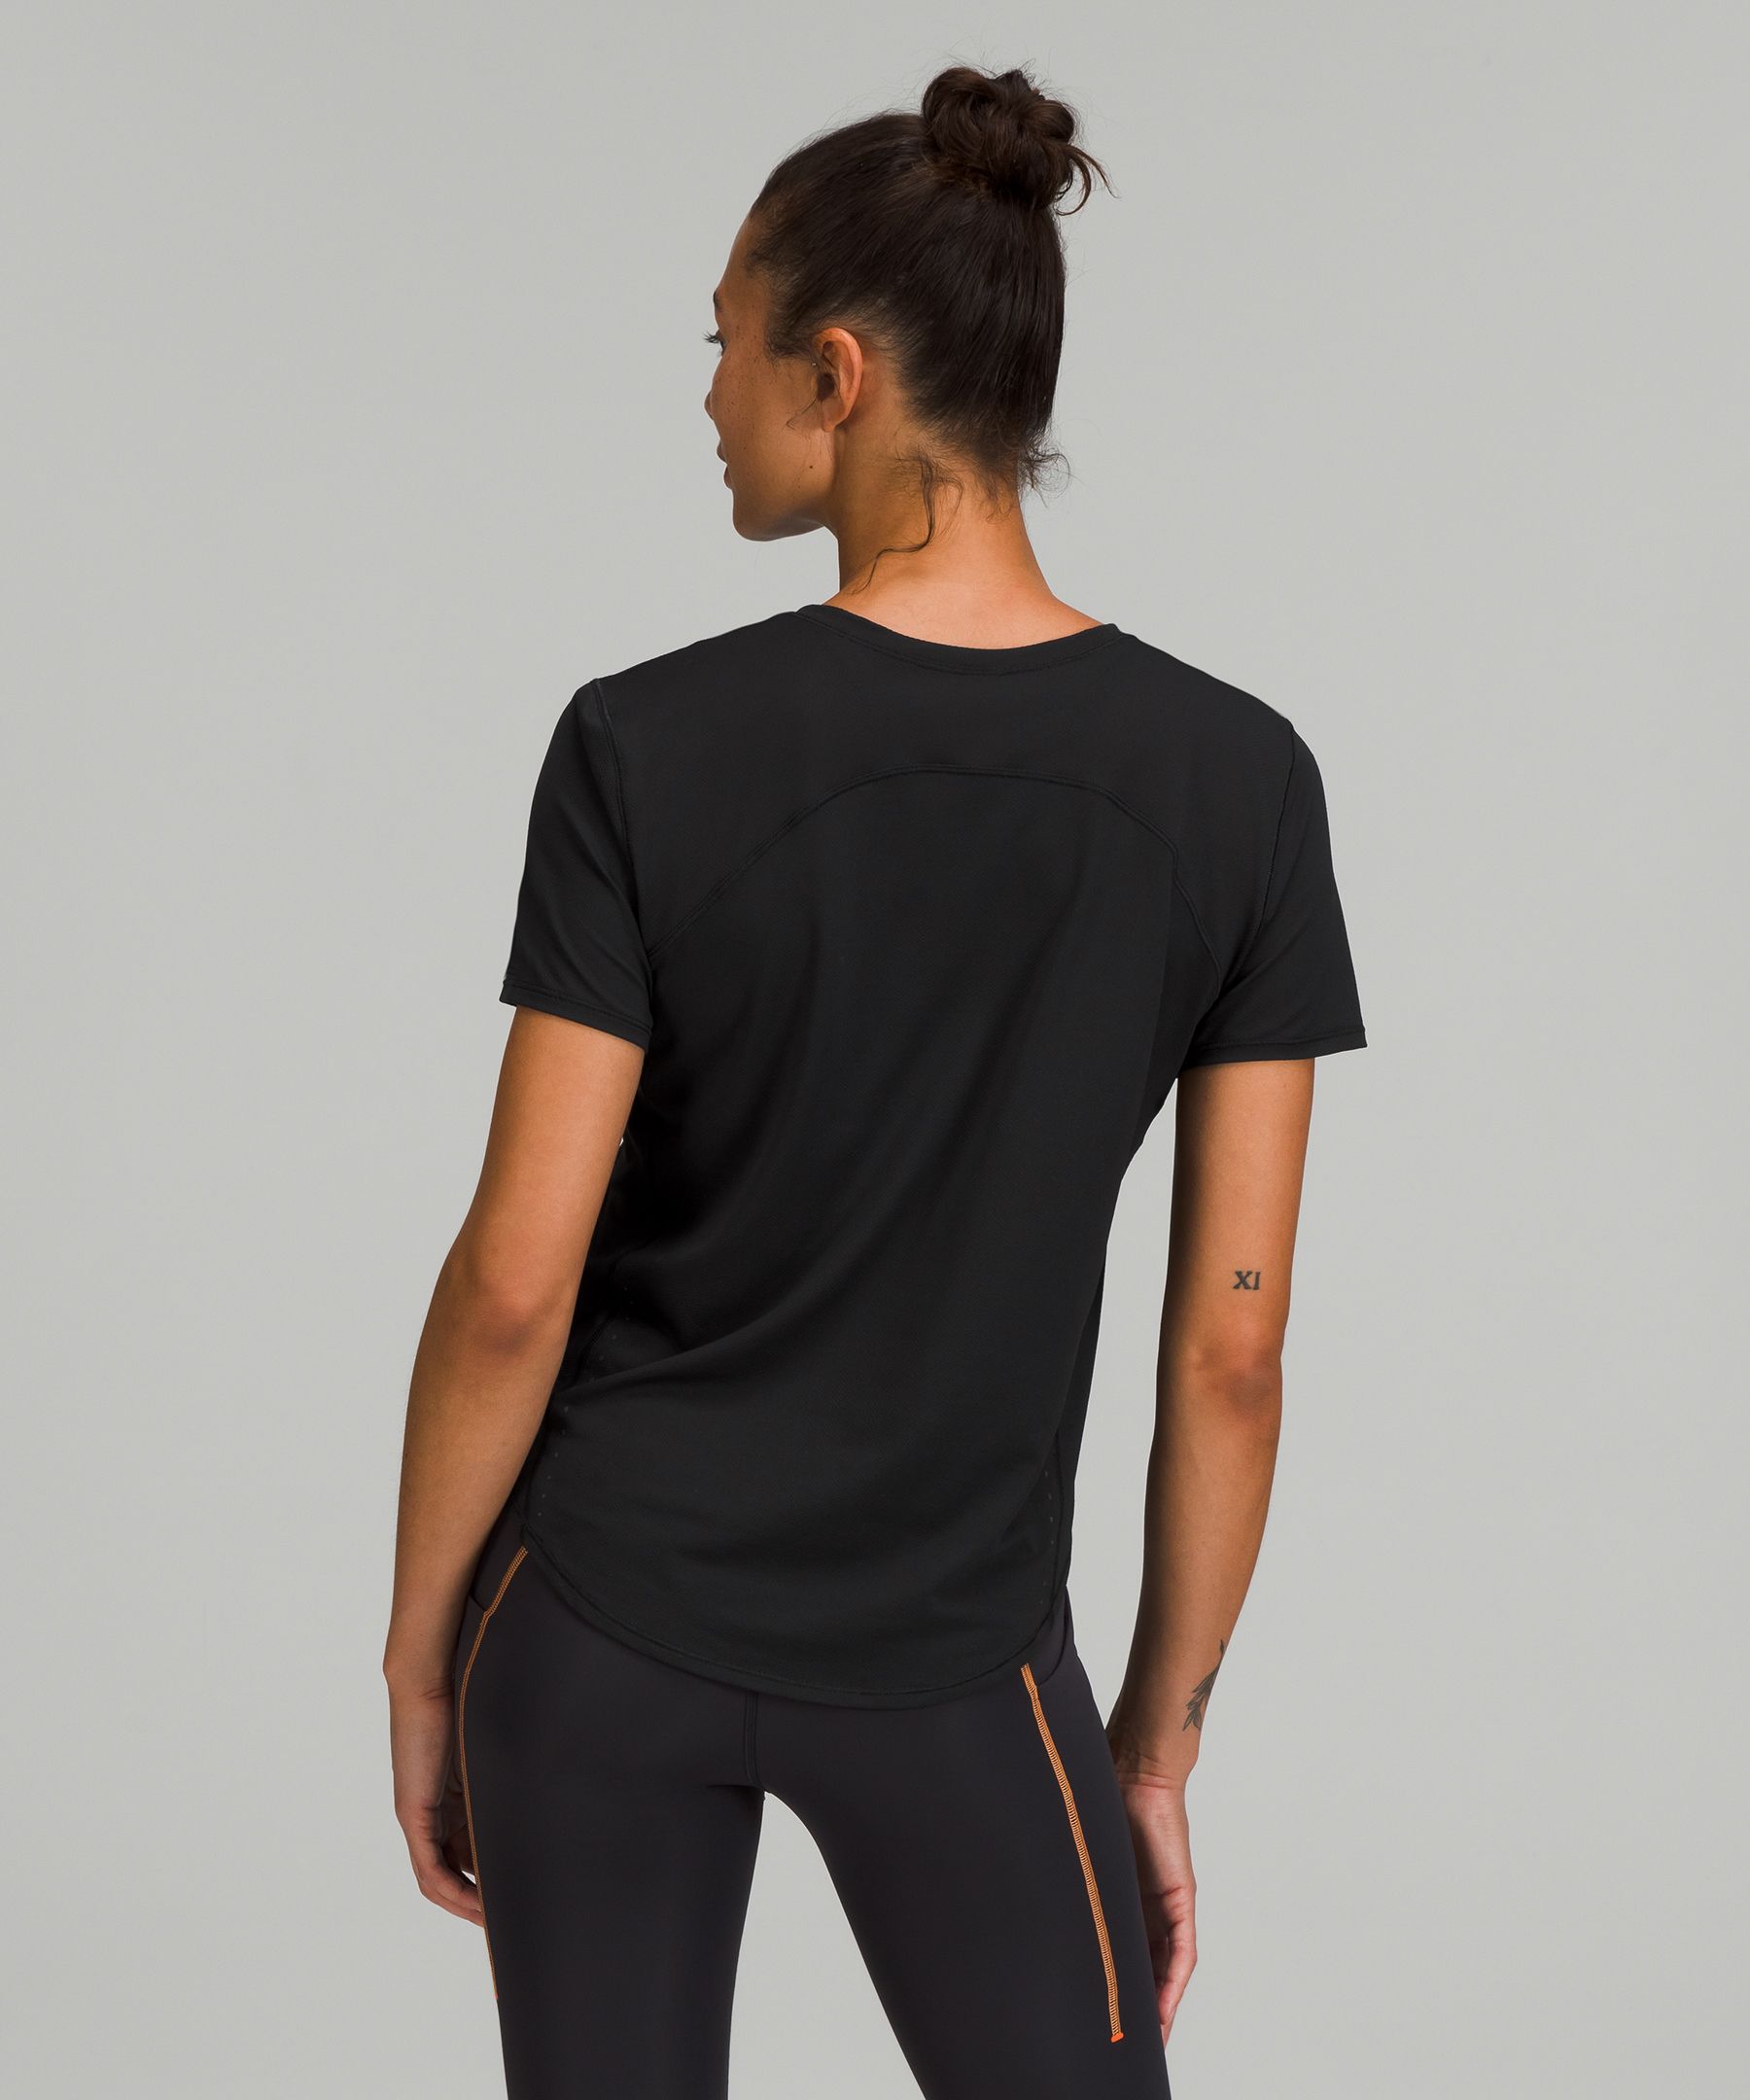 High-Neck Running and Training T-Shirt, Women's Short Sleeve Shirts & Tee's